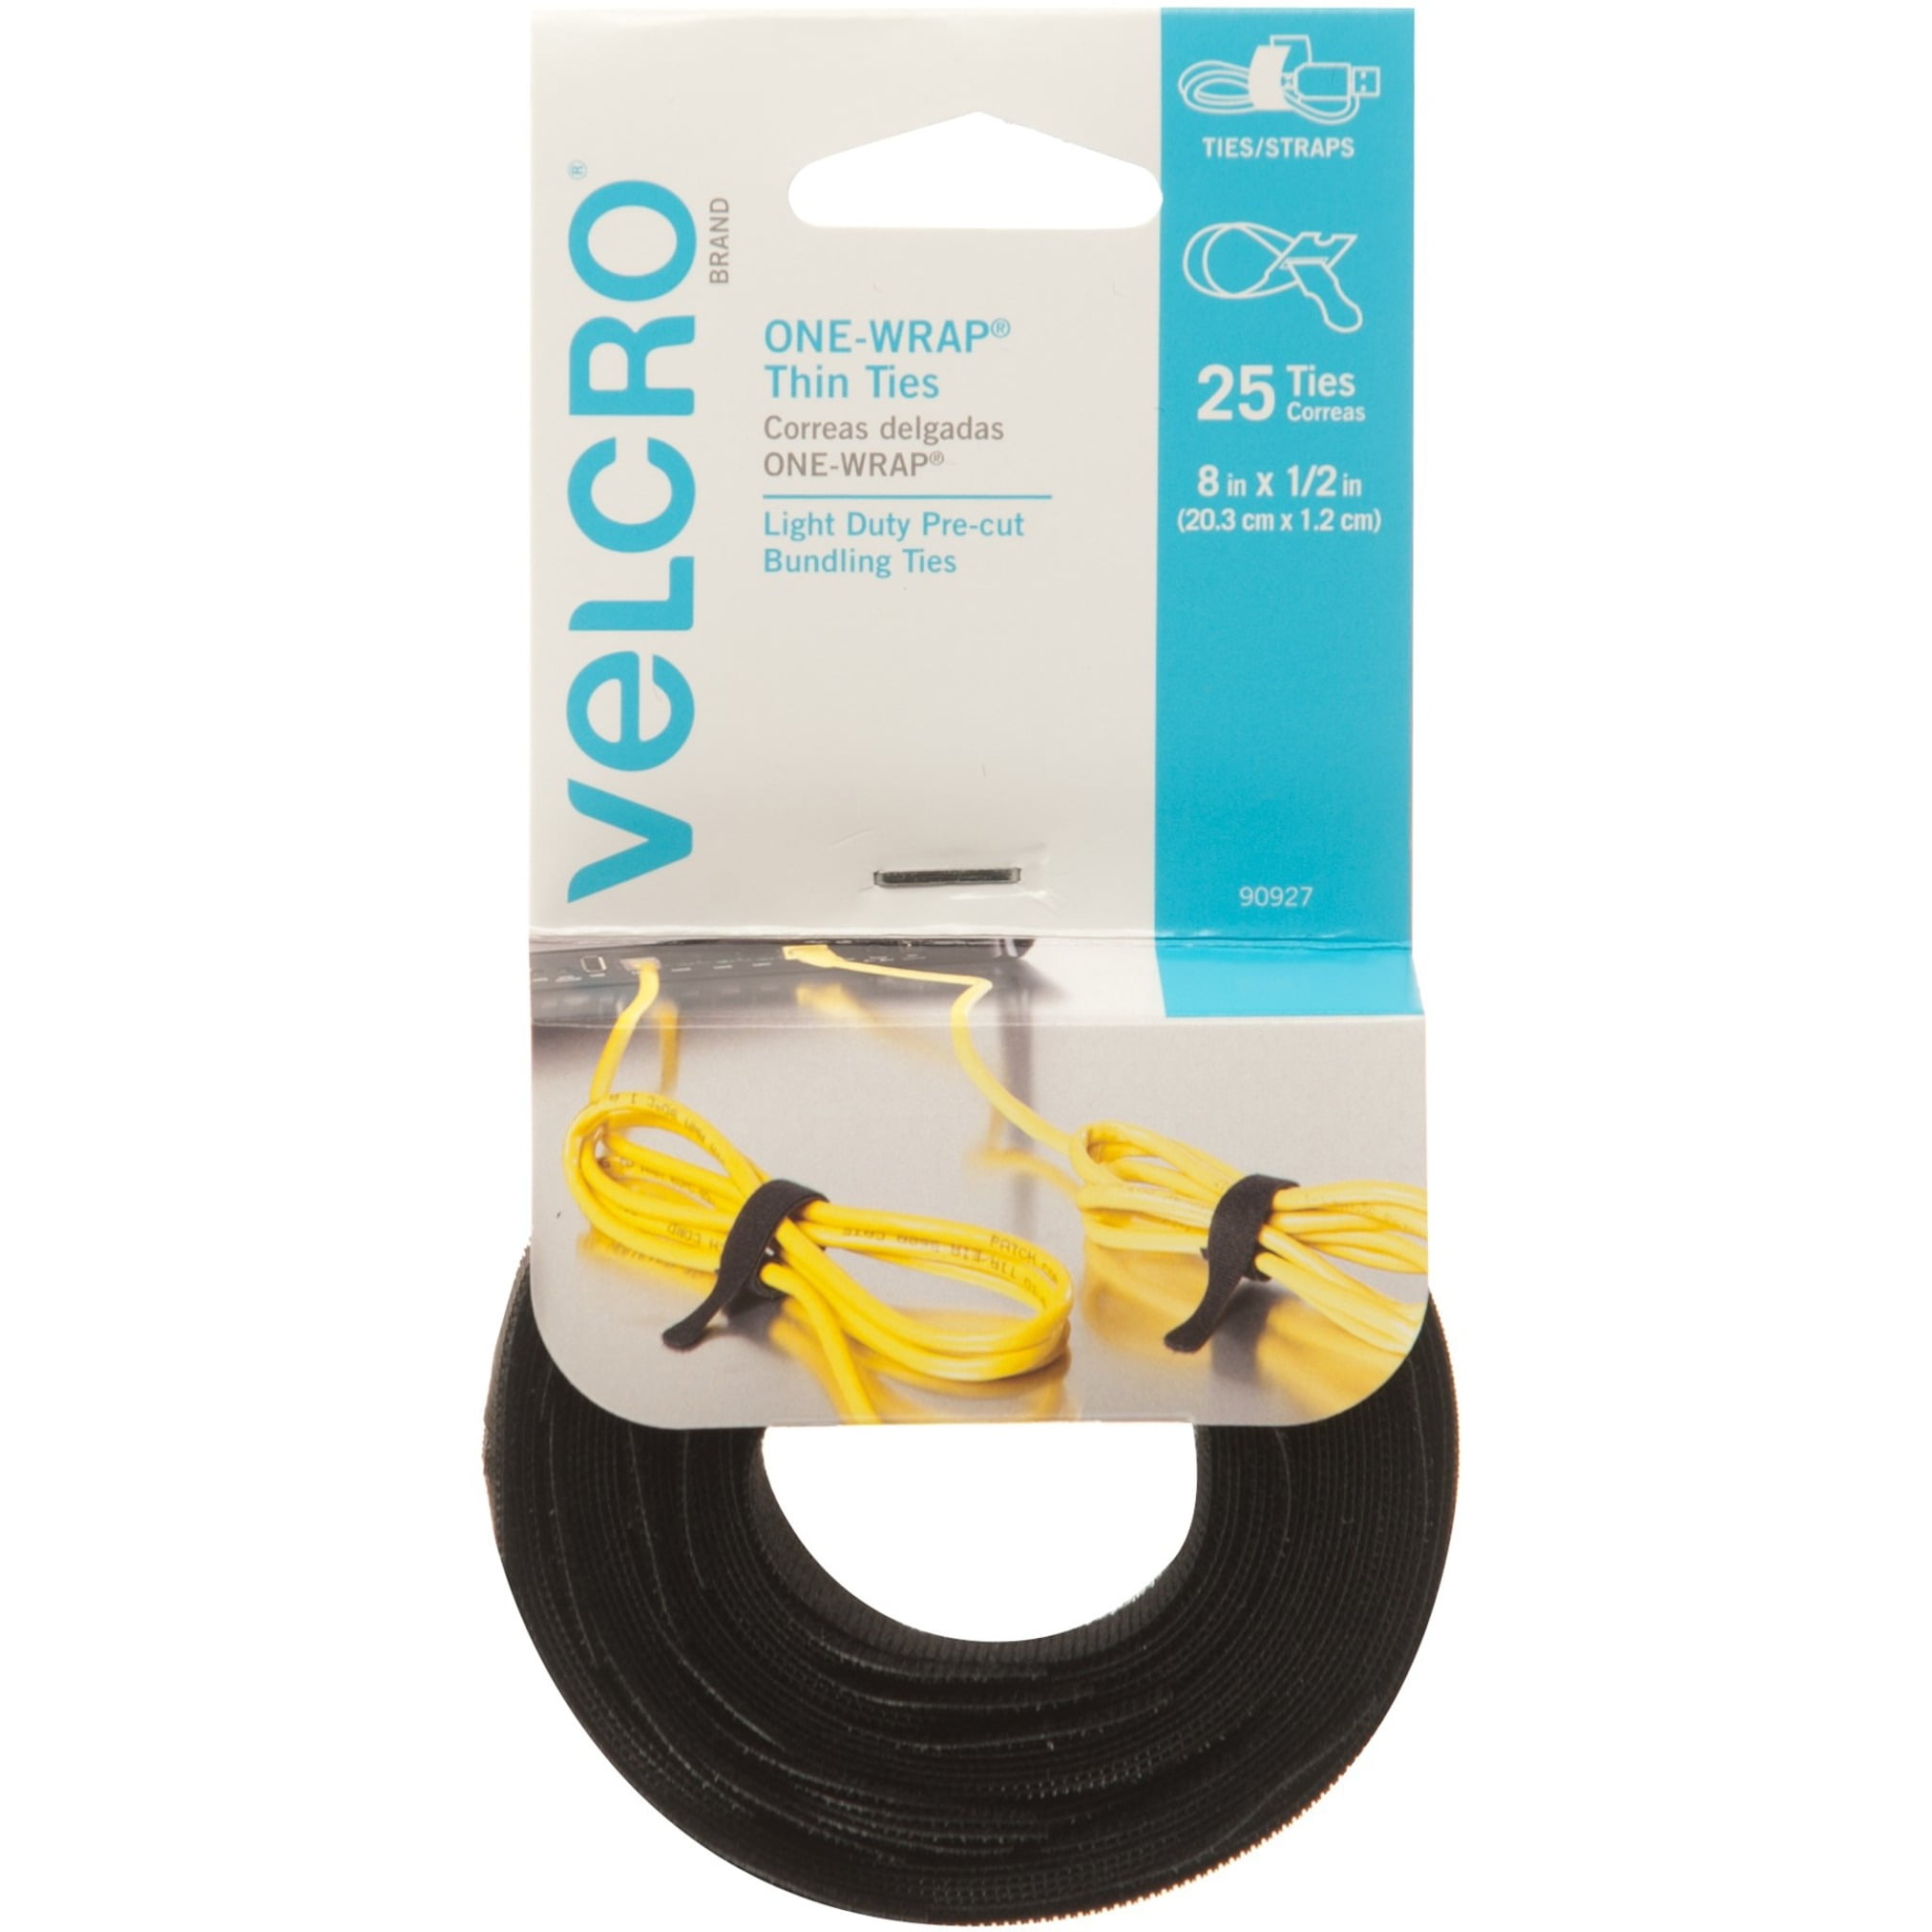 Velcro VEL134, Tape - Individual Strips, 1 x 75' Loop, Black